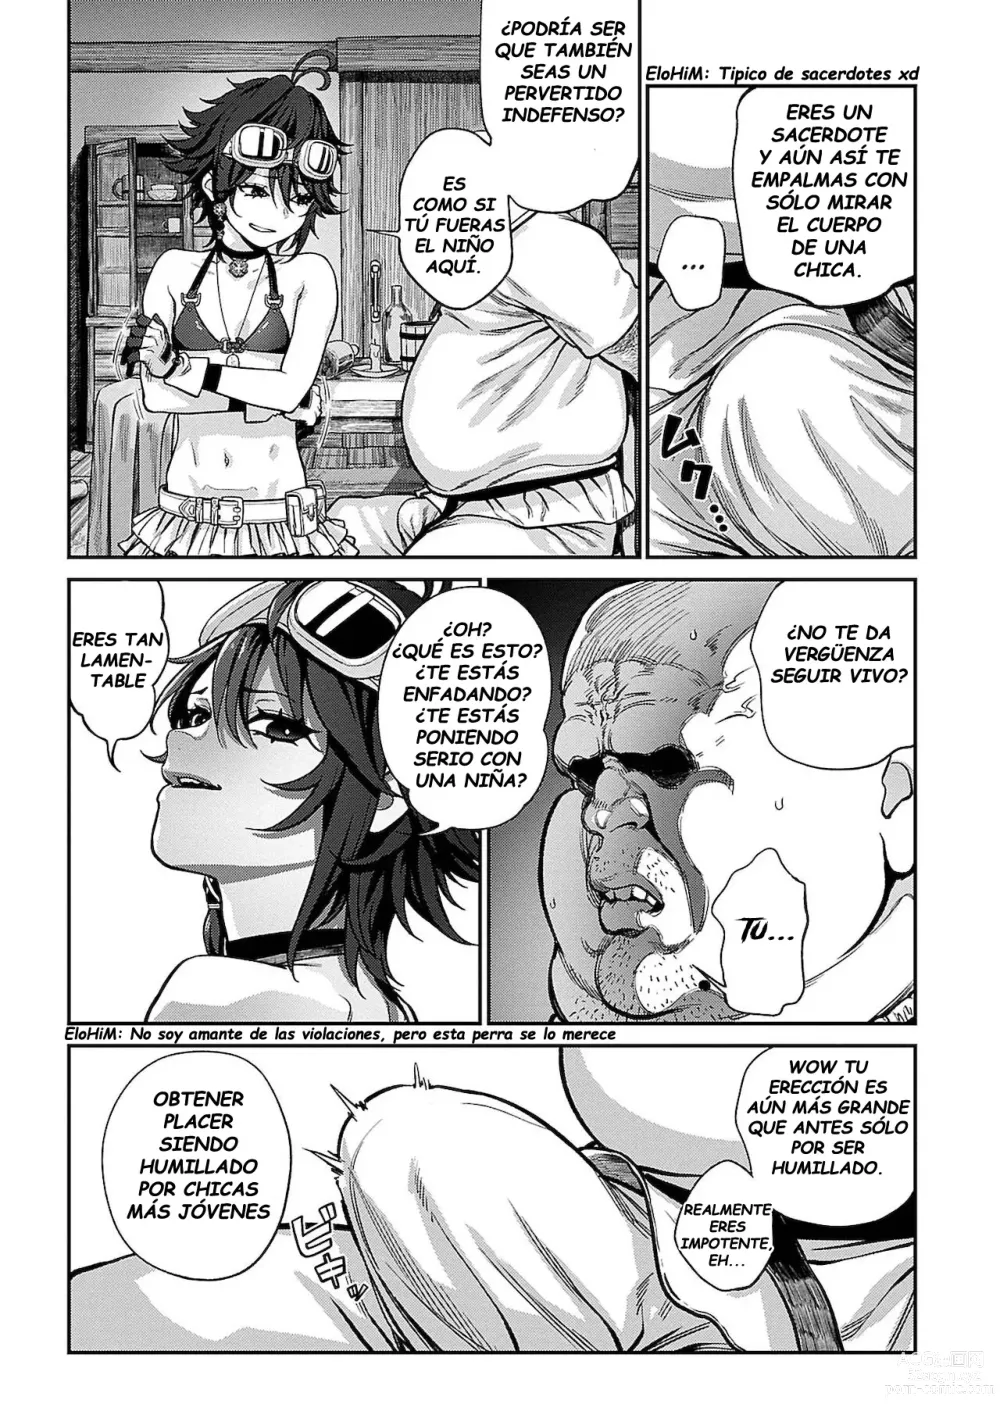 Page 6 of manga Unique Job Tanetsuke Oji-san